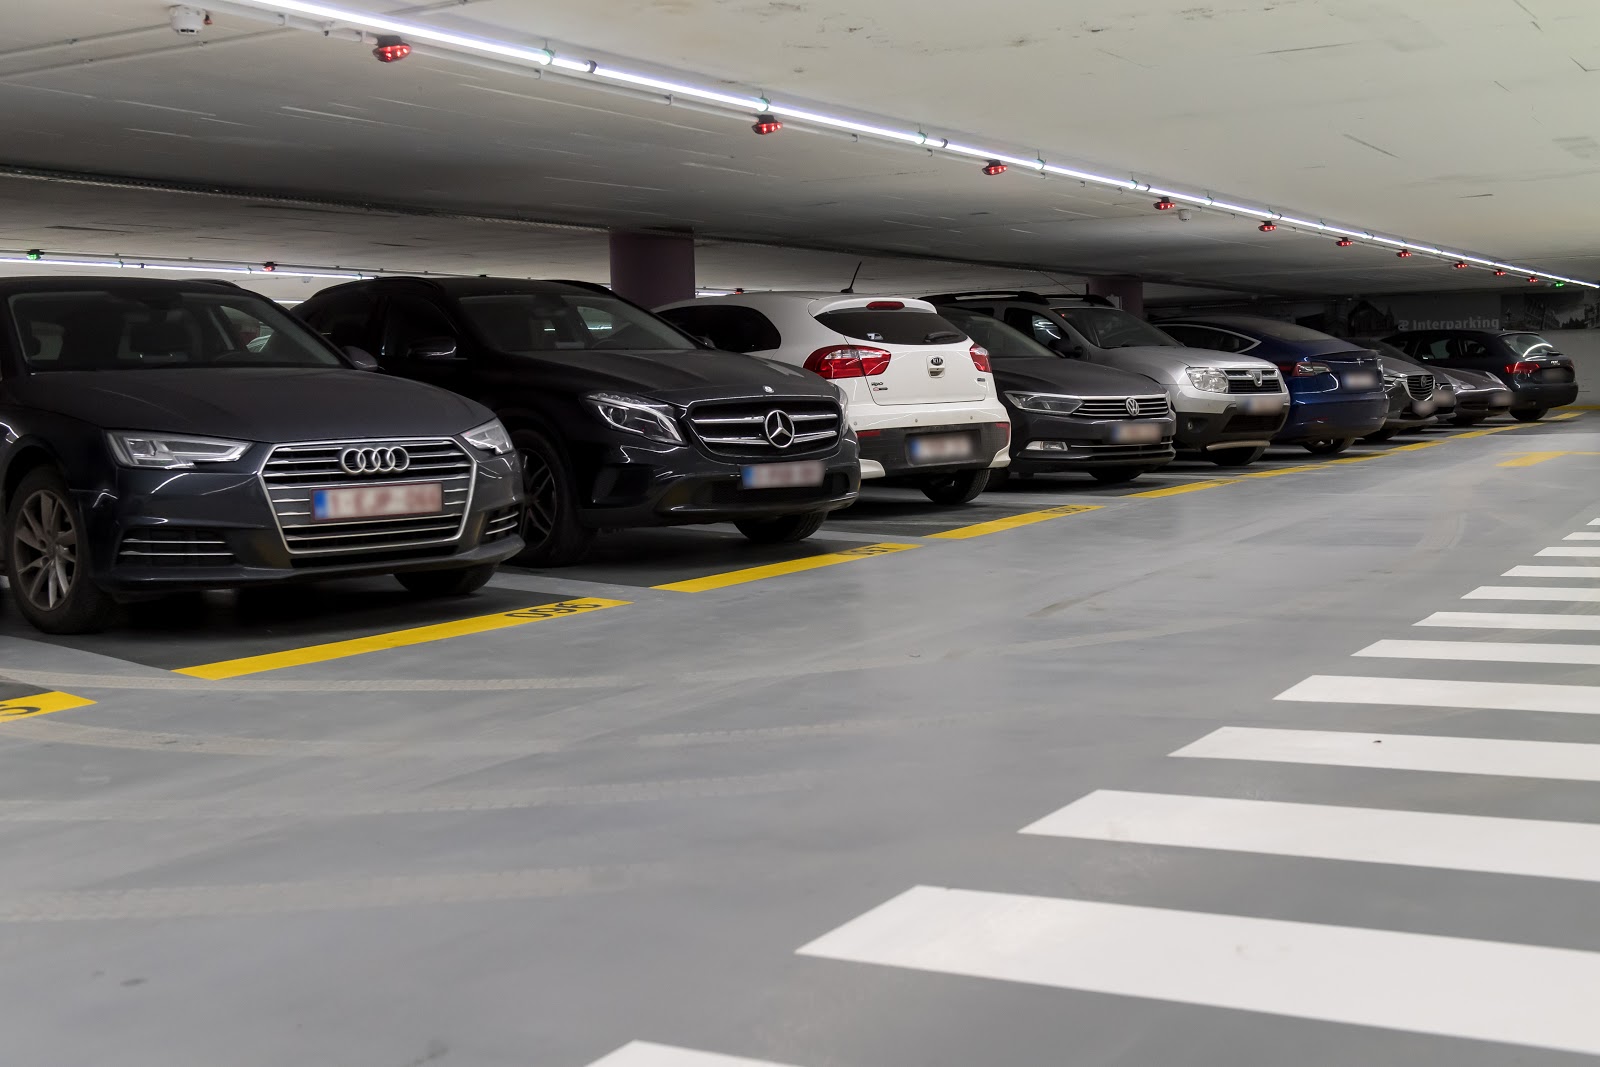 Interparking Antwerpen - Parking Roosevelt